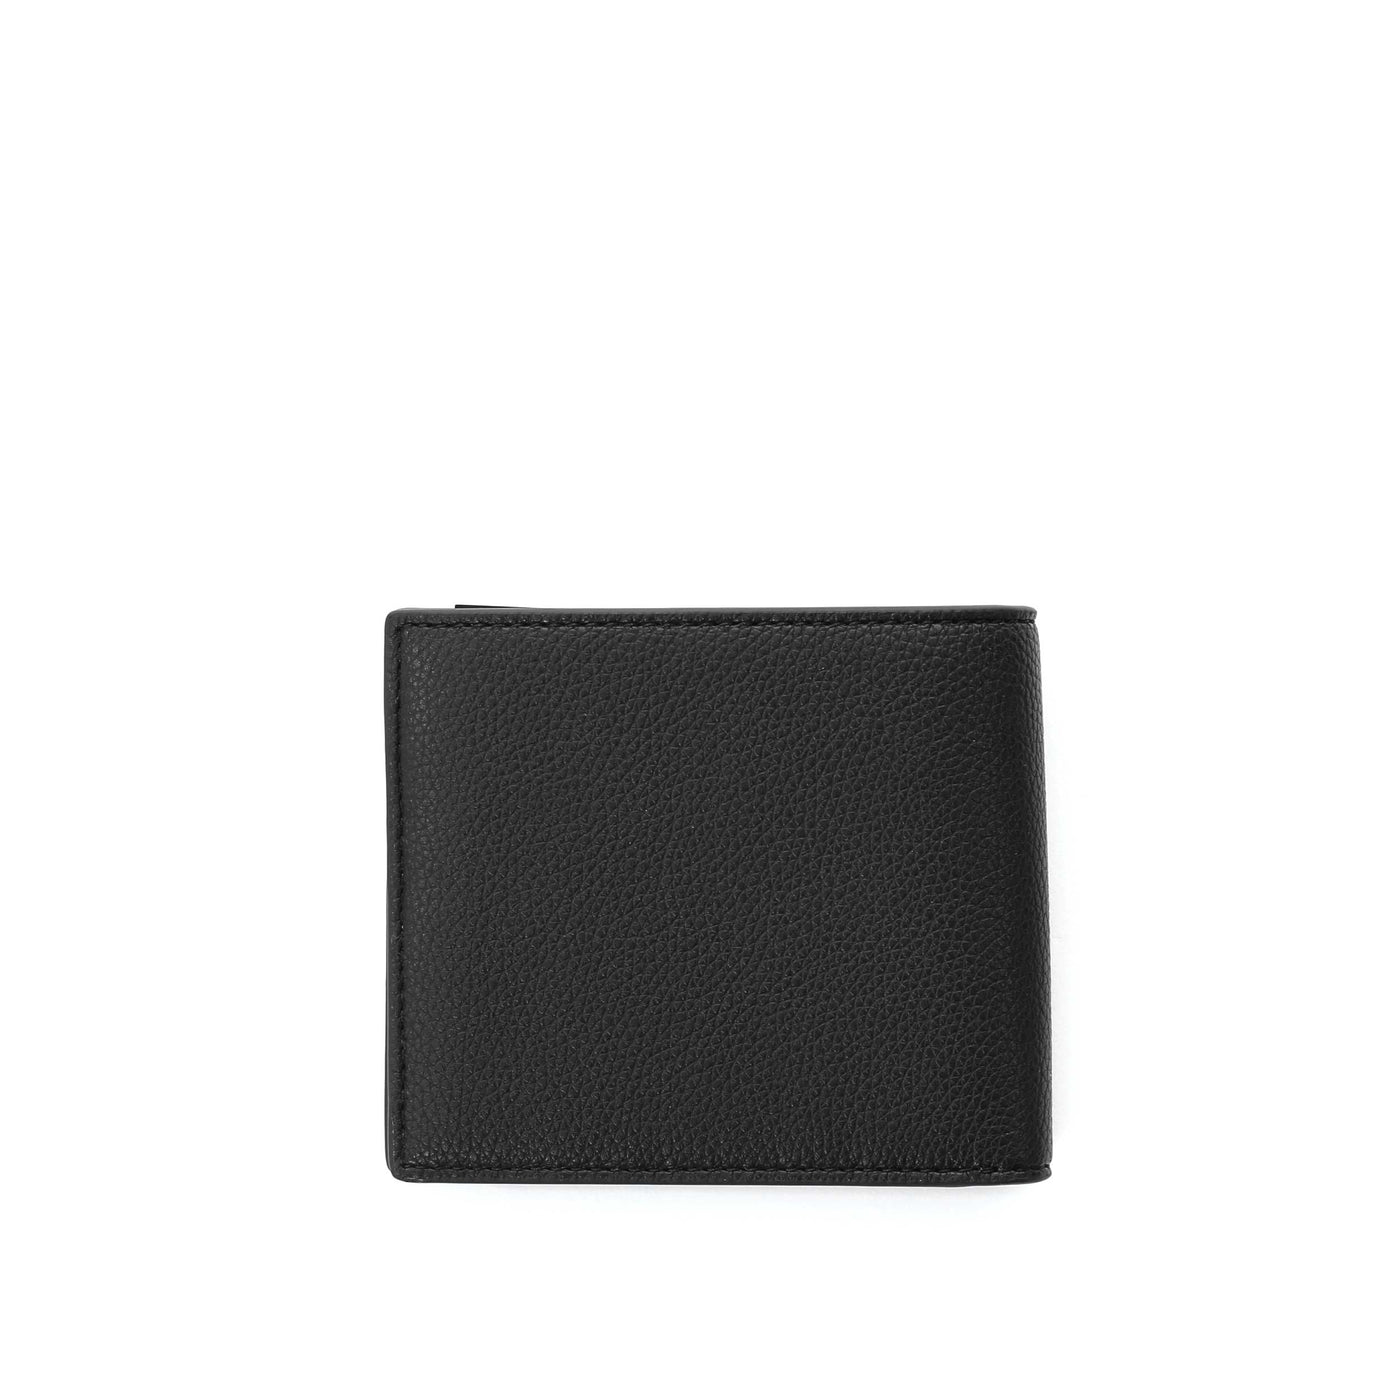 BOSS Ray_8 cc Wallet in Black Back